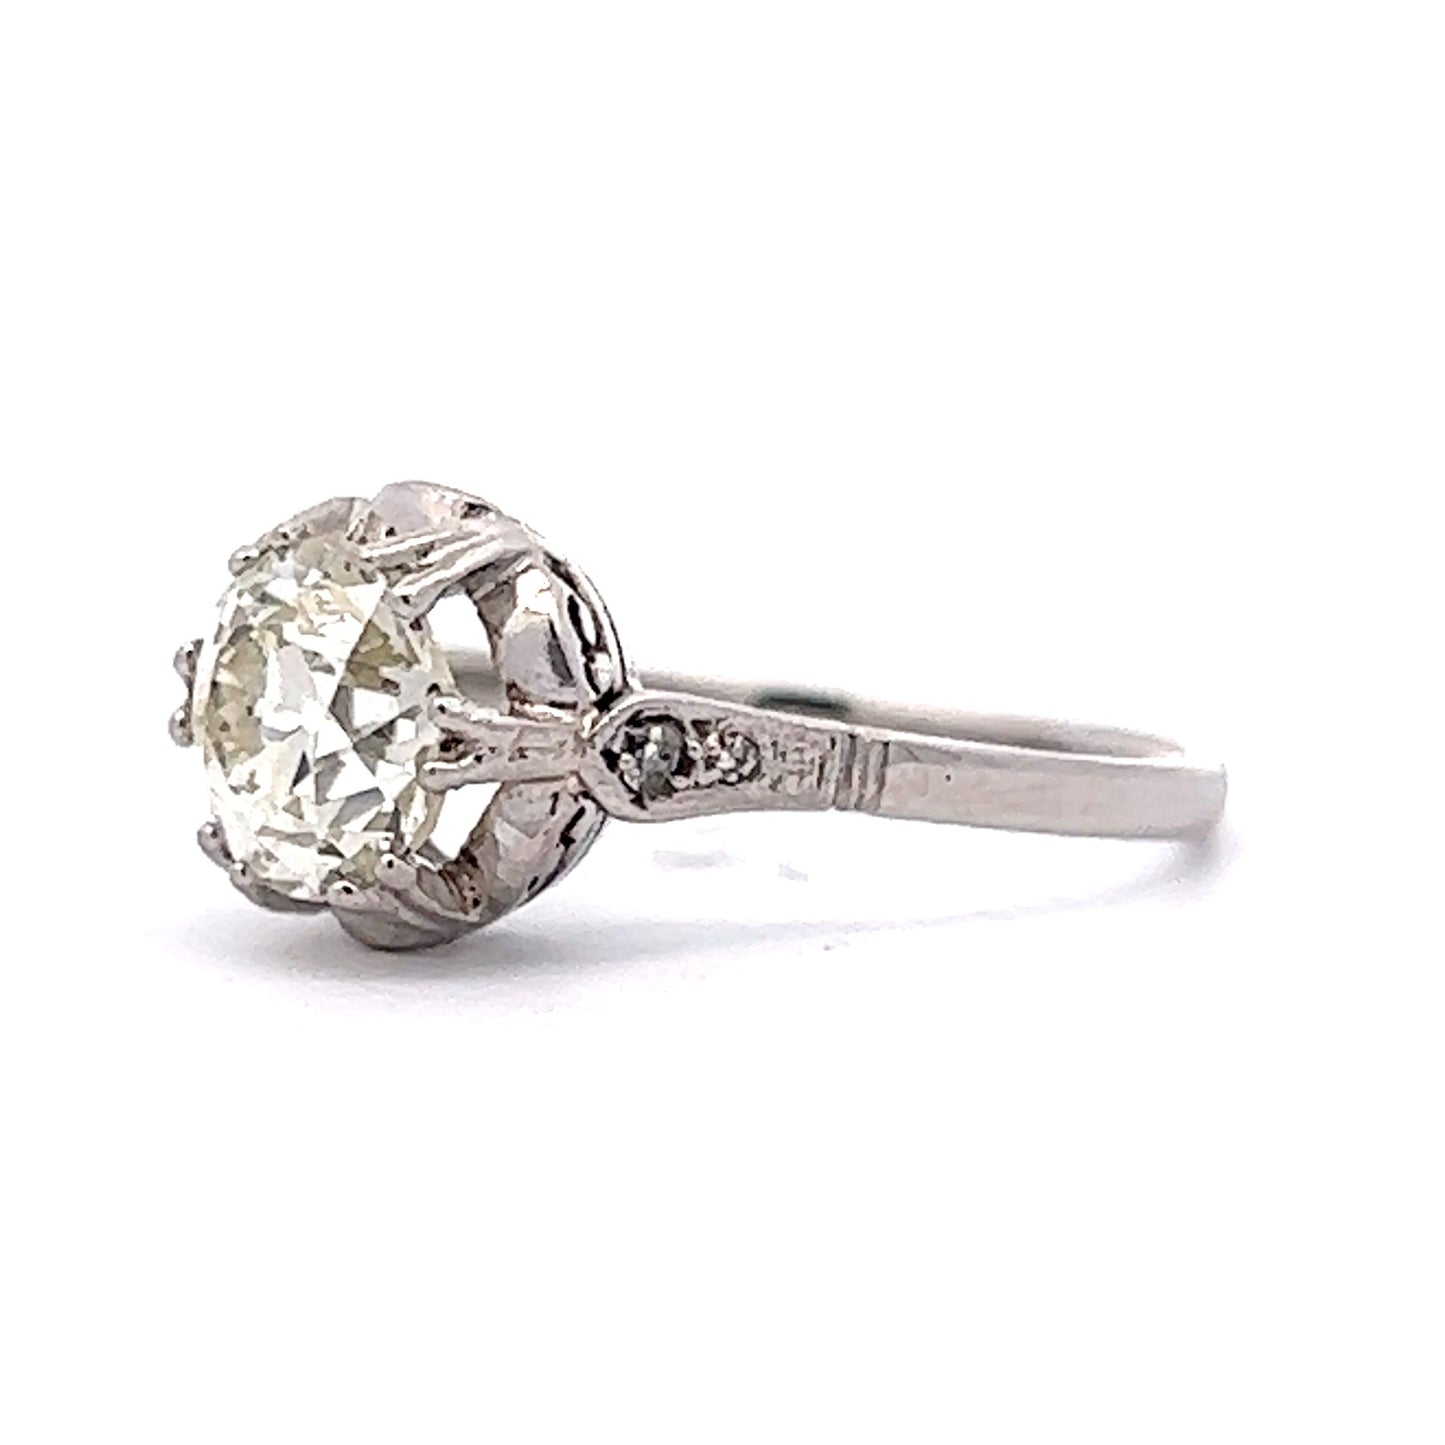 1.63 Vintage Art Deco Engagement Ring in Platinum